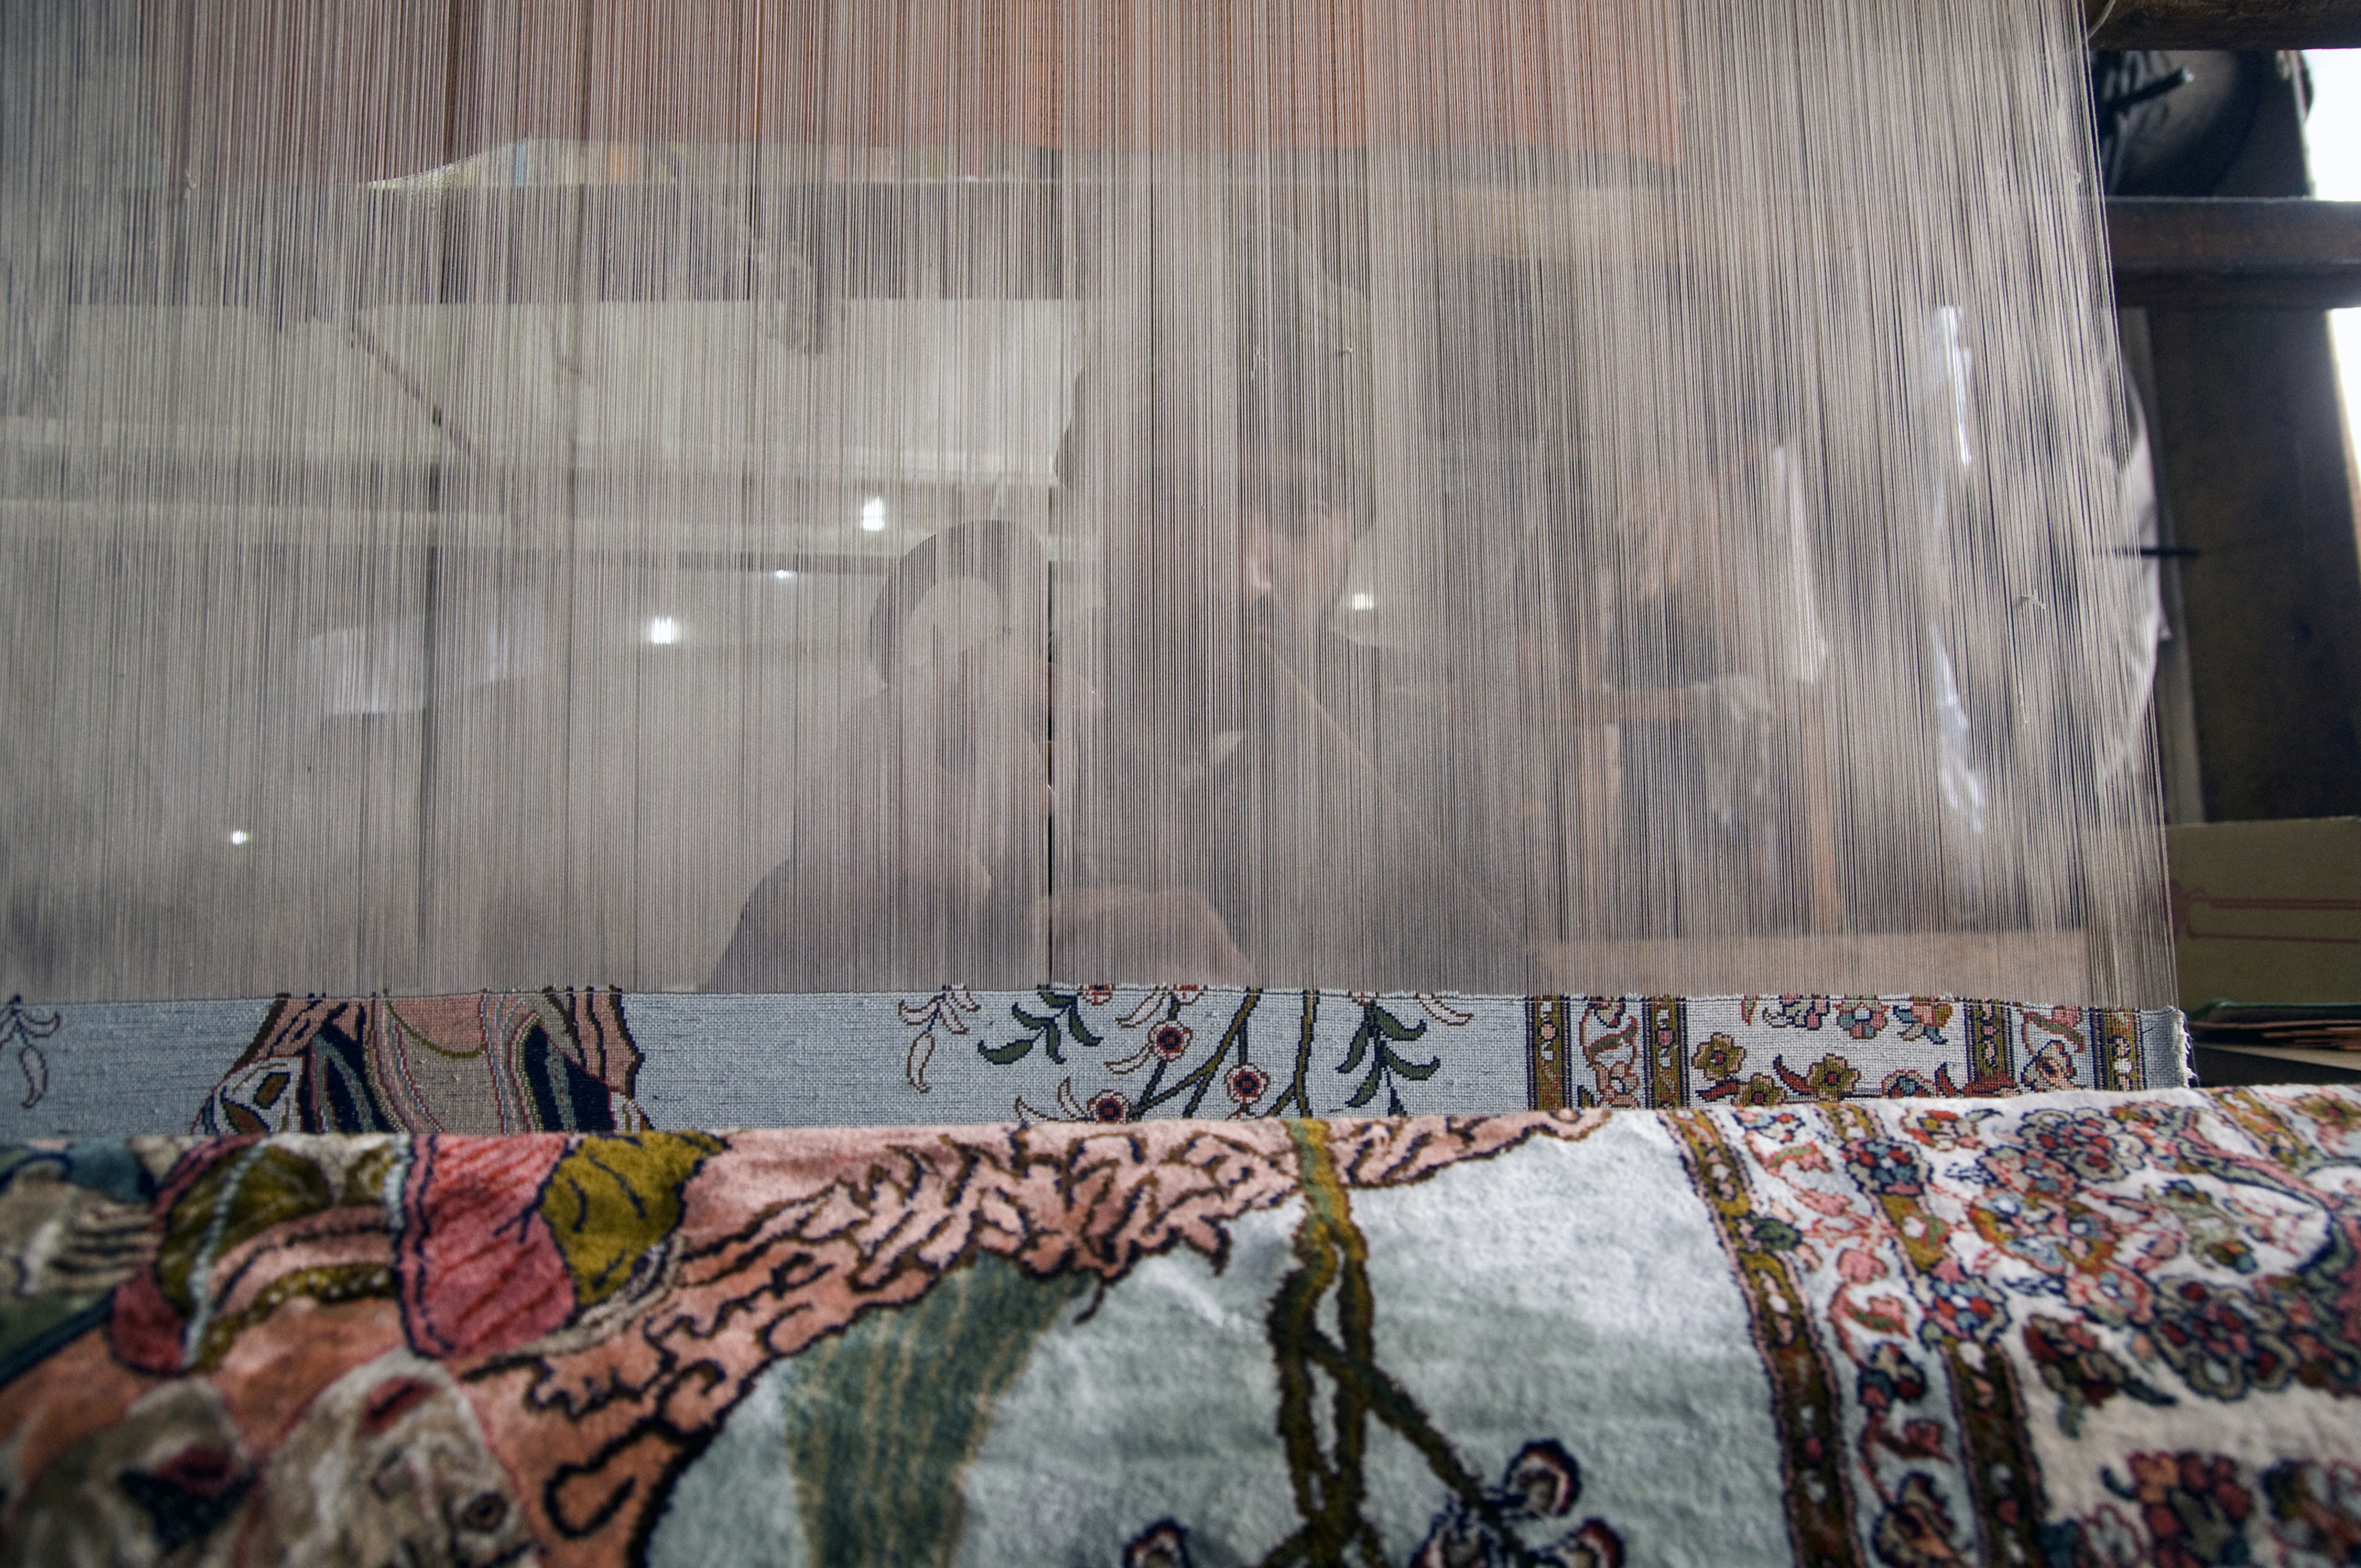 A weaver sits behind his loom (photo: Sugato Mukherjee)